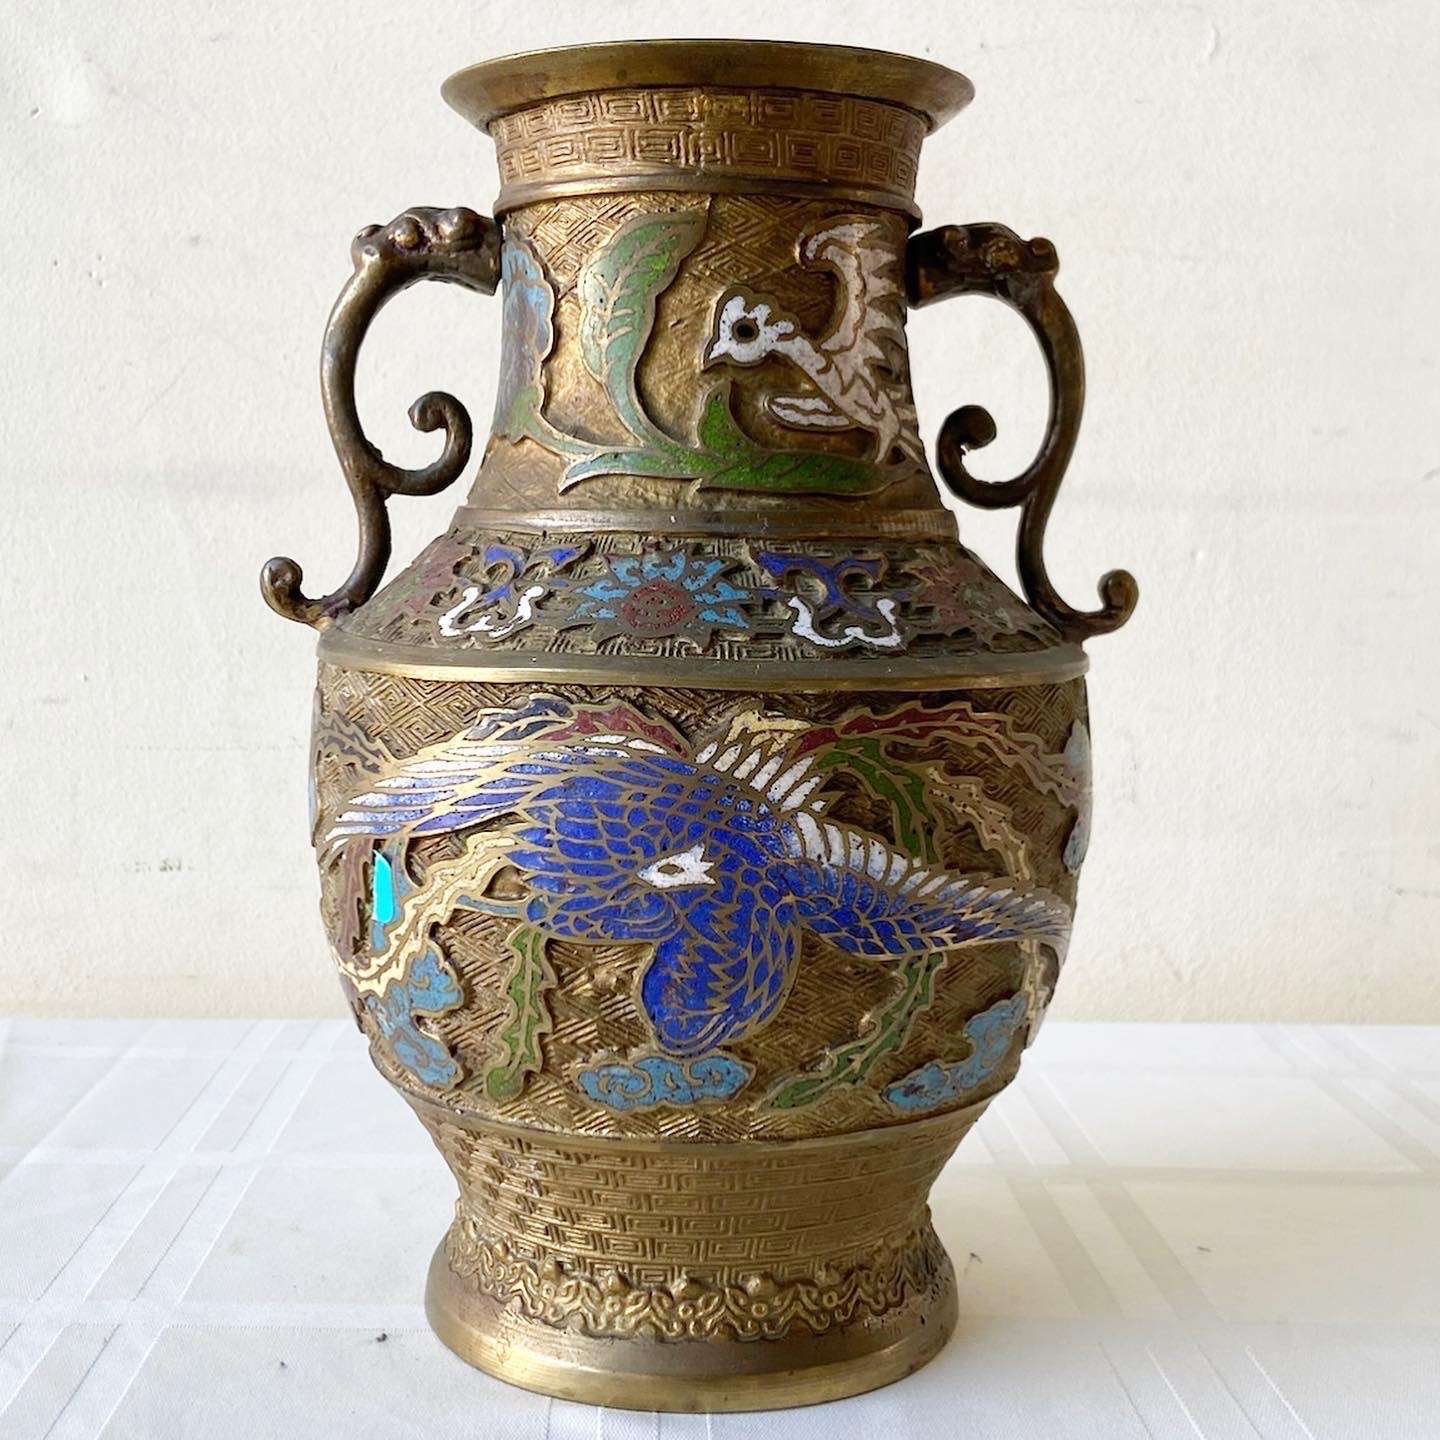 Vintage Japanese Brass Champleve Vase With Ornate Handles